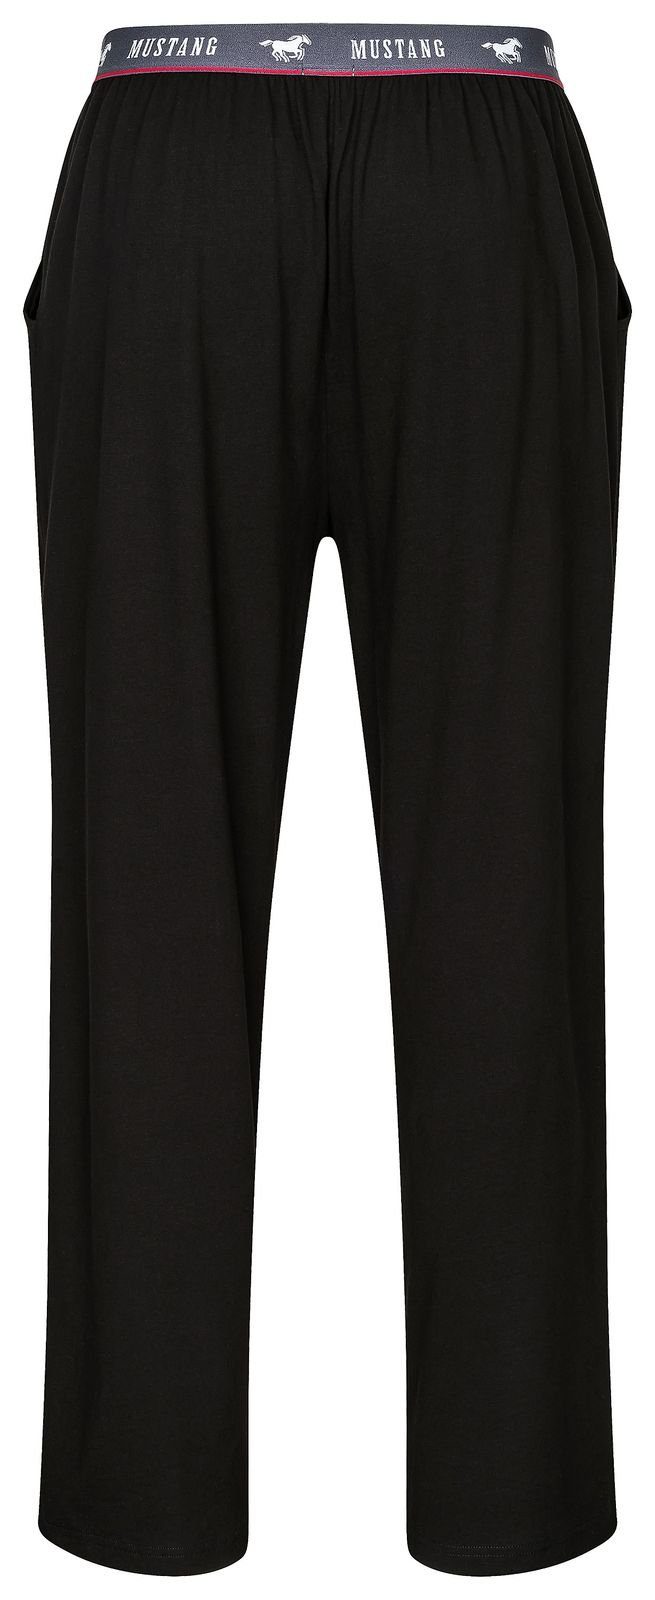 MUSTANG Loungepants Long Pants Lounge roter schwarz Hose Kontraststreifen und Trousers Freizeithose Mustangbranding